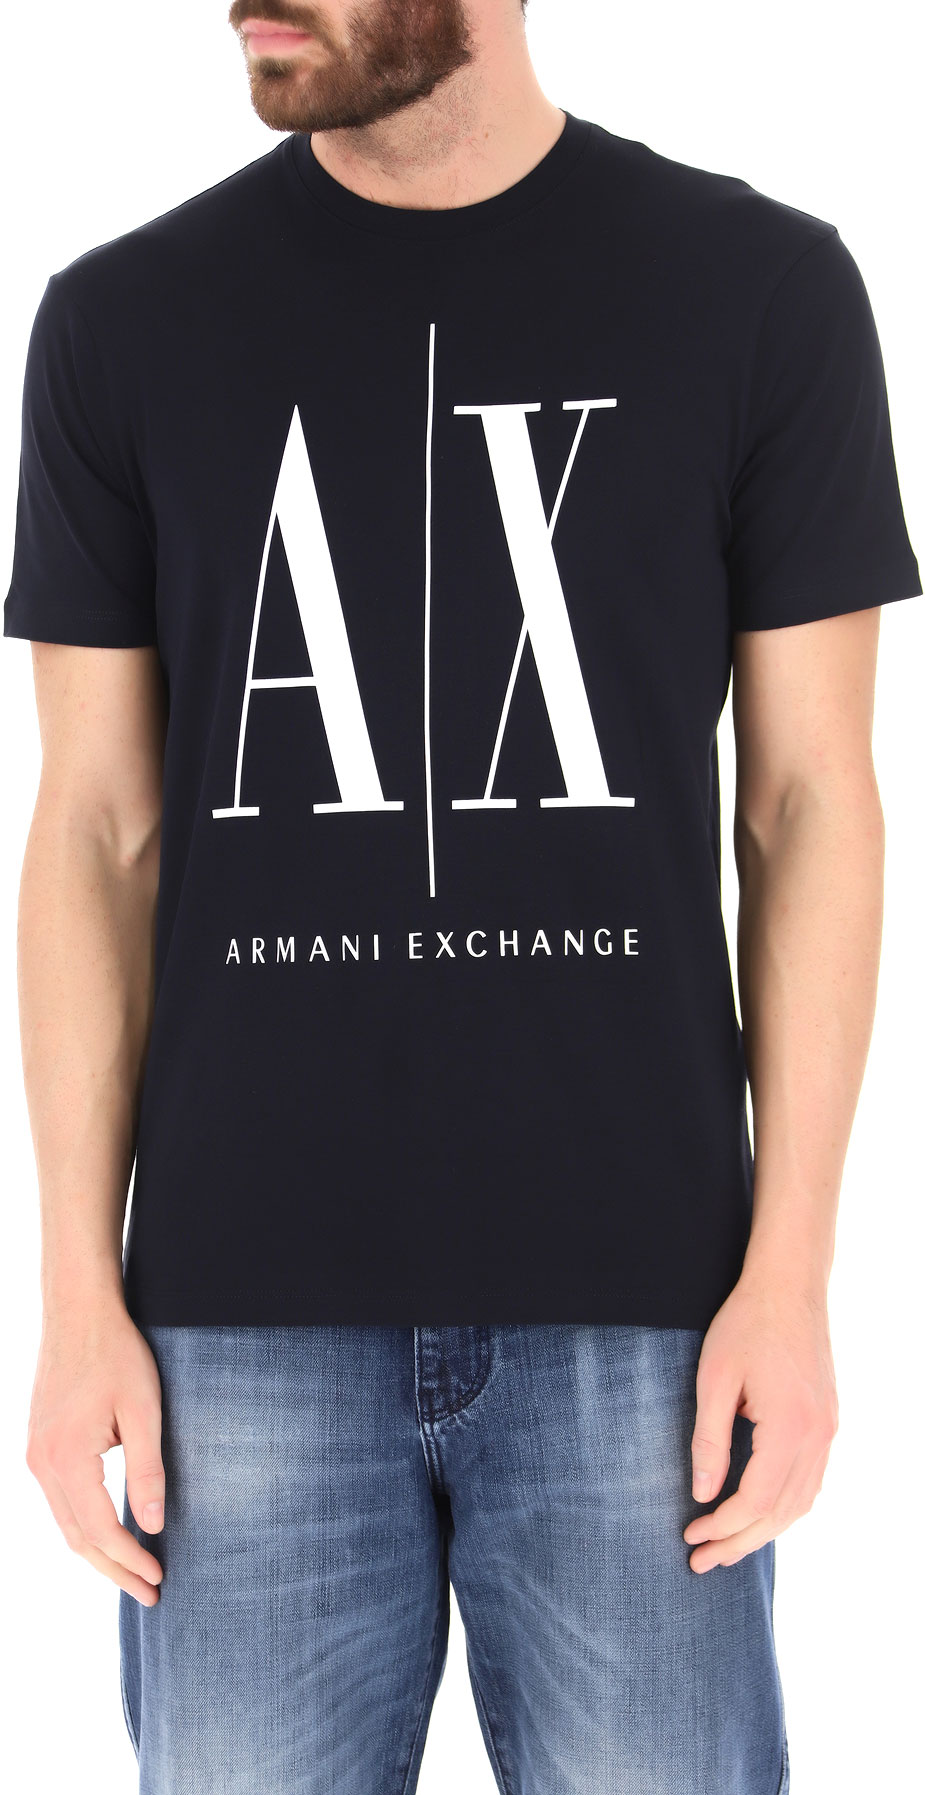 Mens Clothing Armani Exchange, Style code: 8nztpa-zjh4z-1510